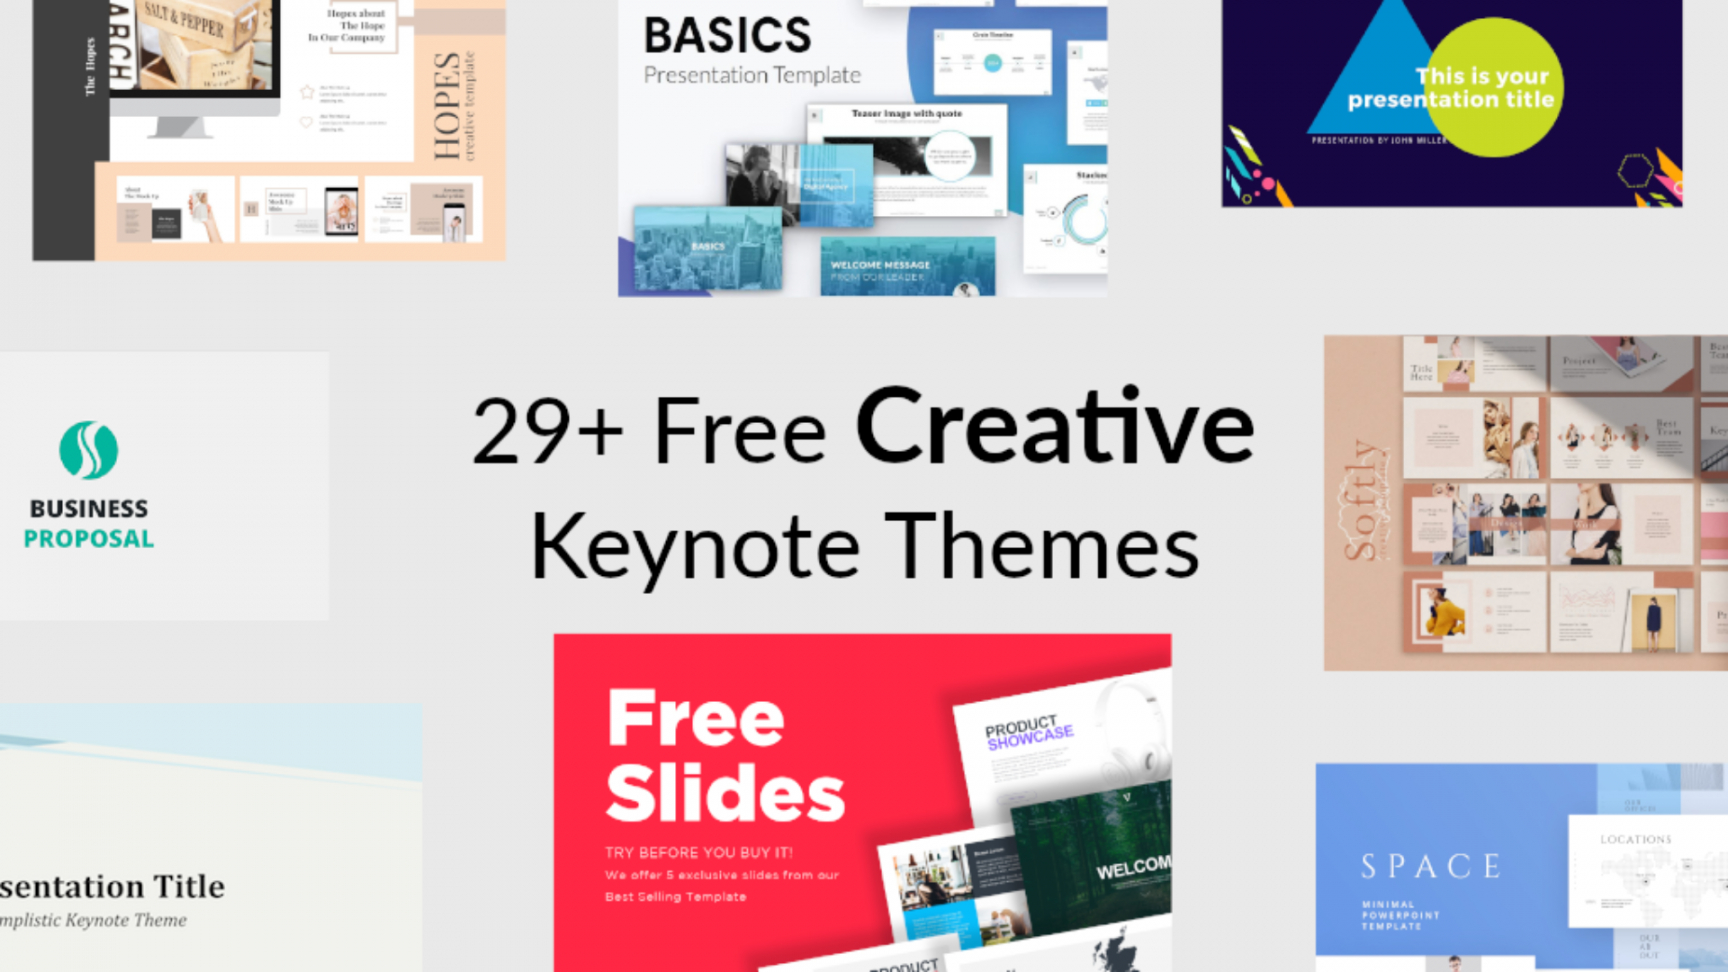 sample 29 free creative apple keynote themes keynote proposal template word